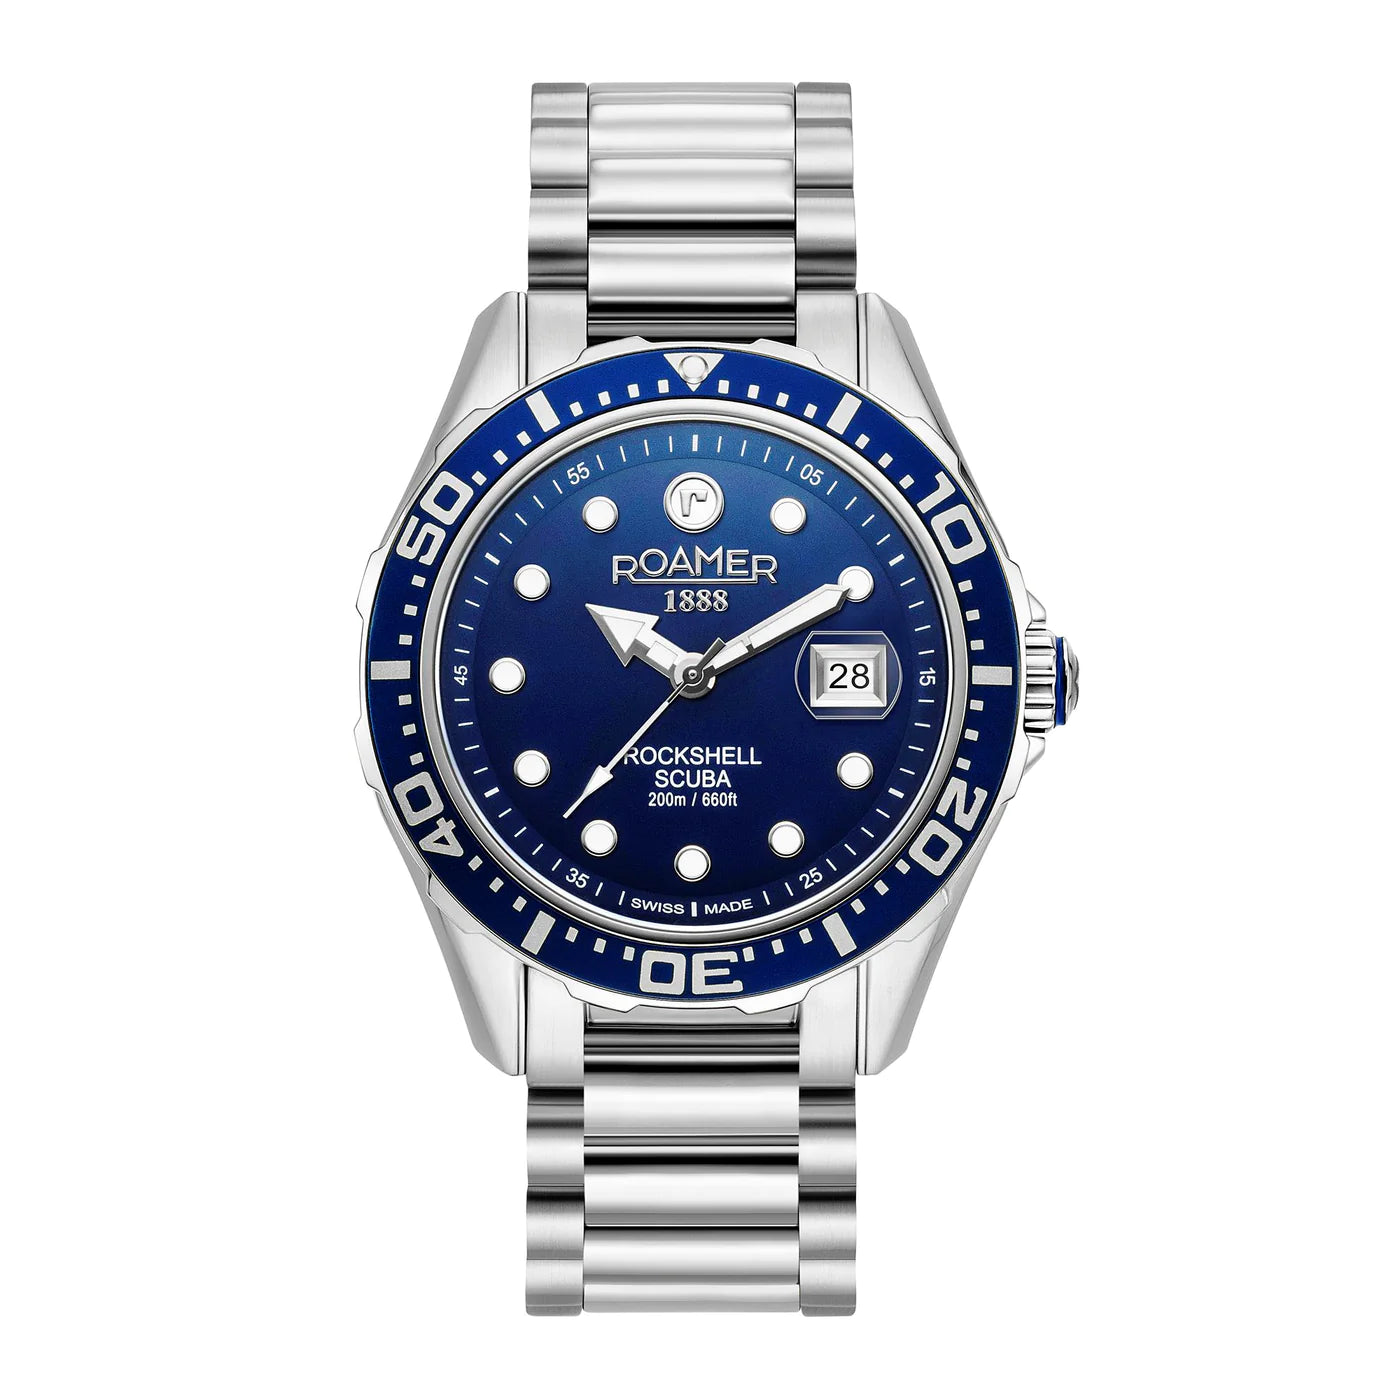 Roamer 220858 41 45 50 Rockshell Scuba Blue Dial Stainless Steel Bracelet Men's Watch - mzwatcheslk srilanka